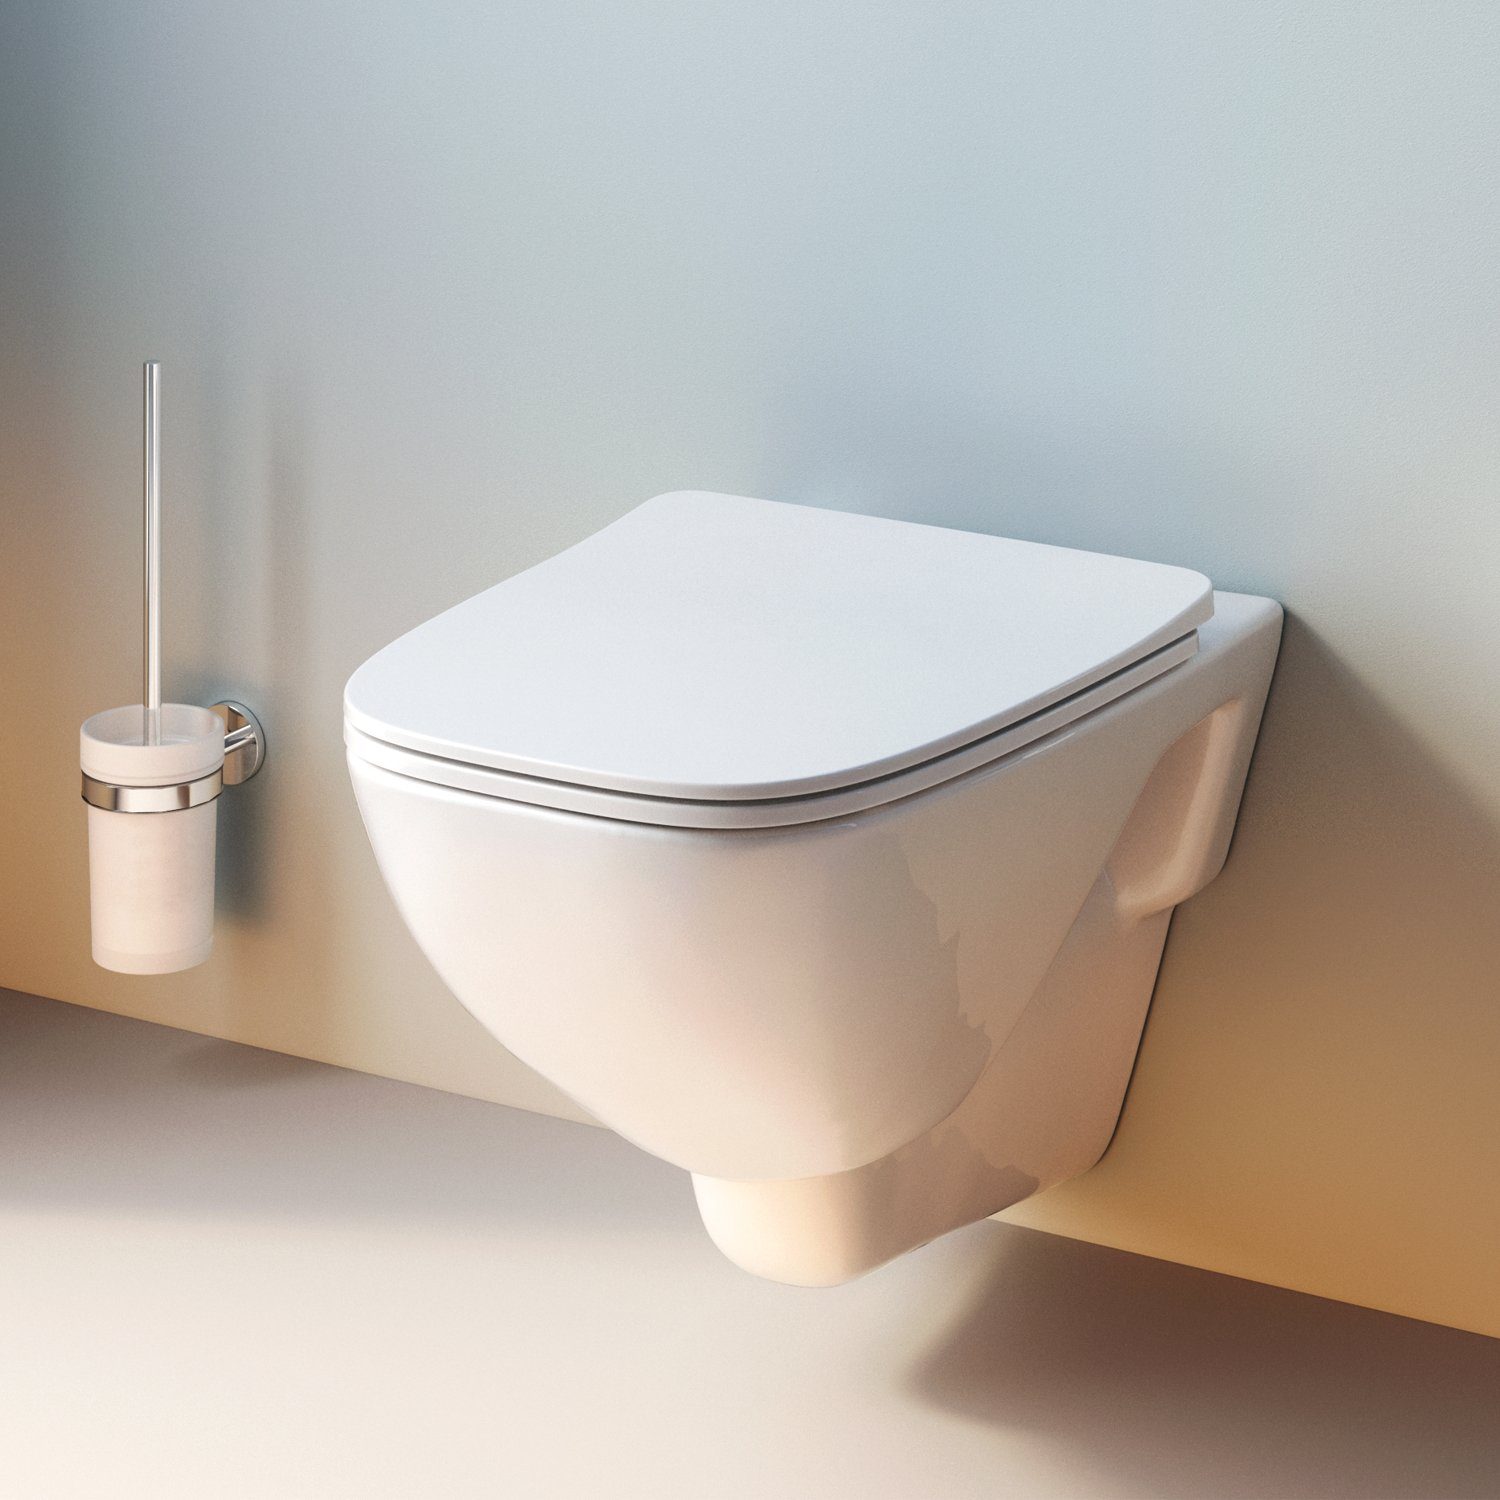 AM.PM Tiefspül-WC Wand WC X-Joy Hänge WC Spülrandloses Toilette aus Keramik, Tiefspüler, wandhängend, Abgang waagerecht, Schnellverschluss-Sitz mit Soft-Close-Funktion, Flash Clean